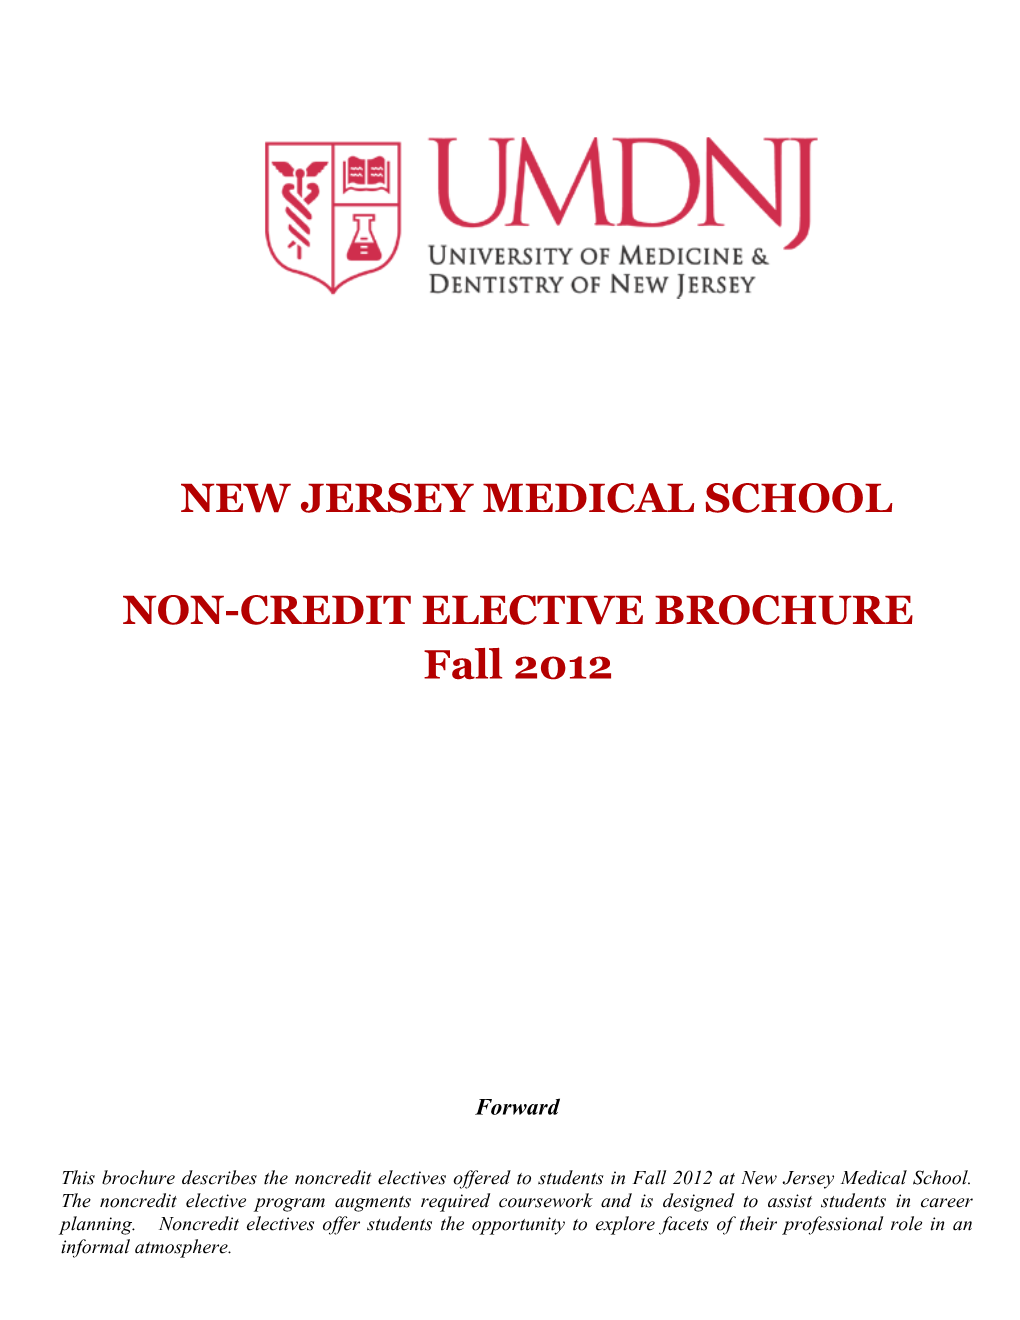 New Jersey Medical School